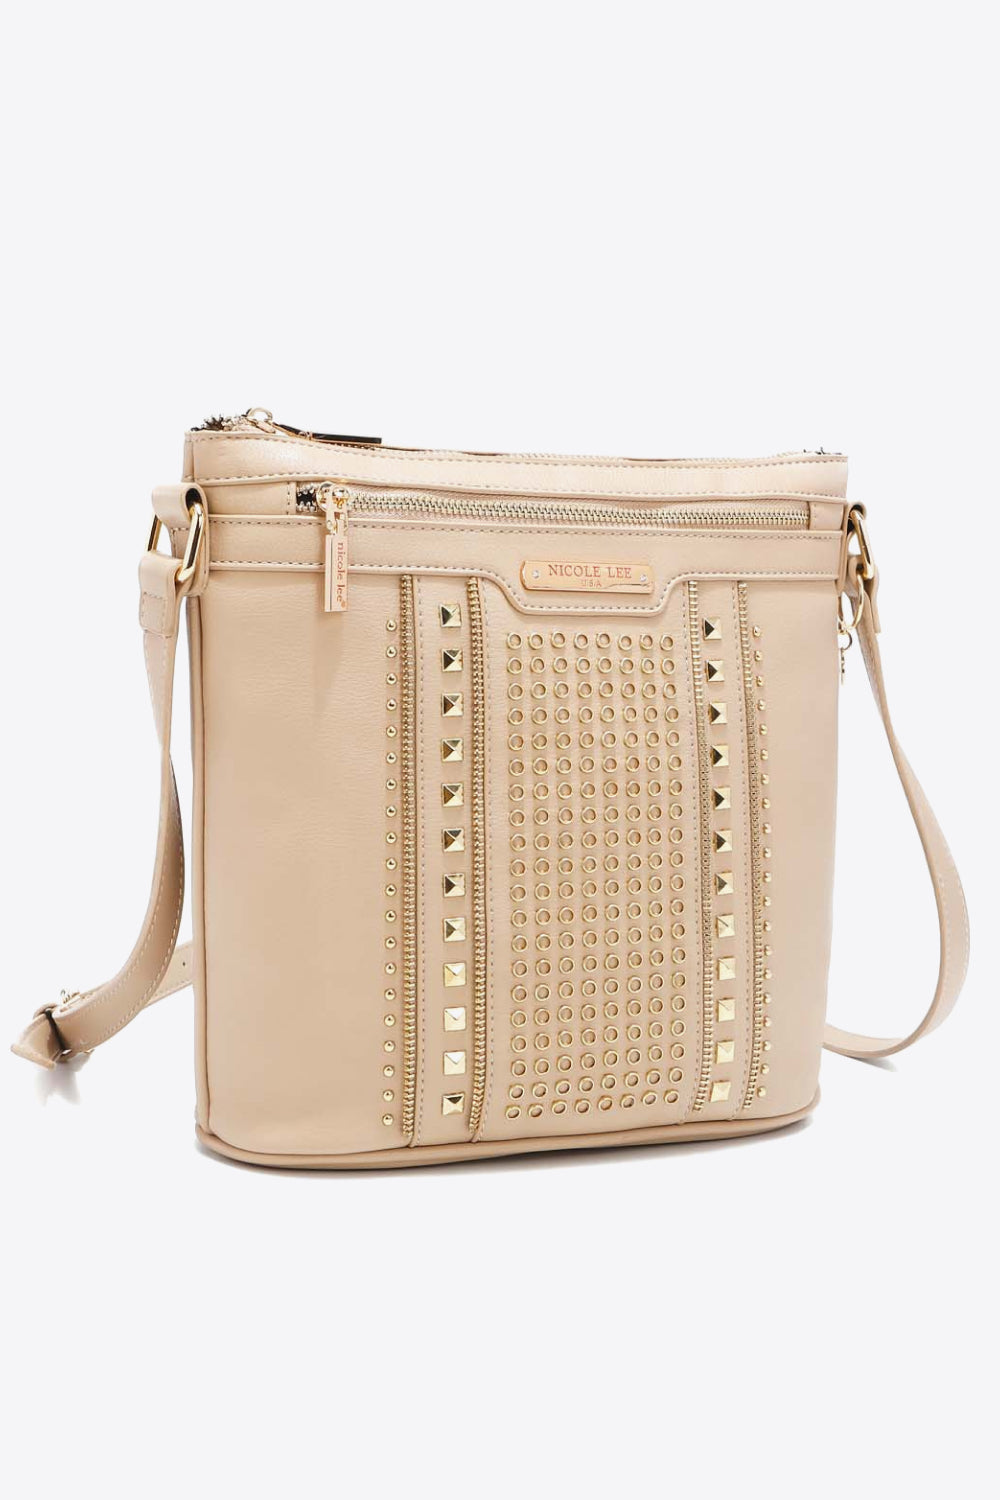 Nicole Lee USA Love Handbag Bags & Luggage - Women's Bags - Top-Handle Bags RYSE Clothing Co. Beige One Size 